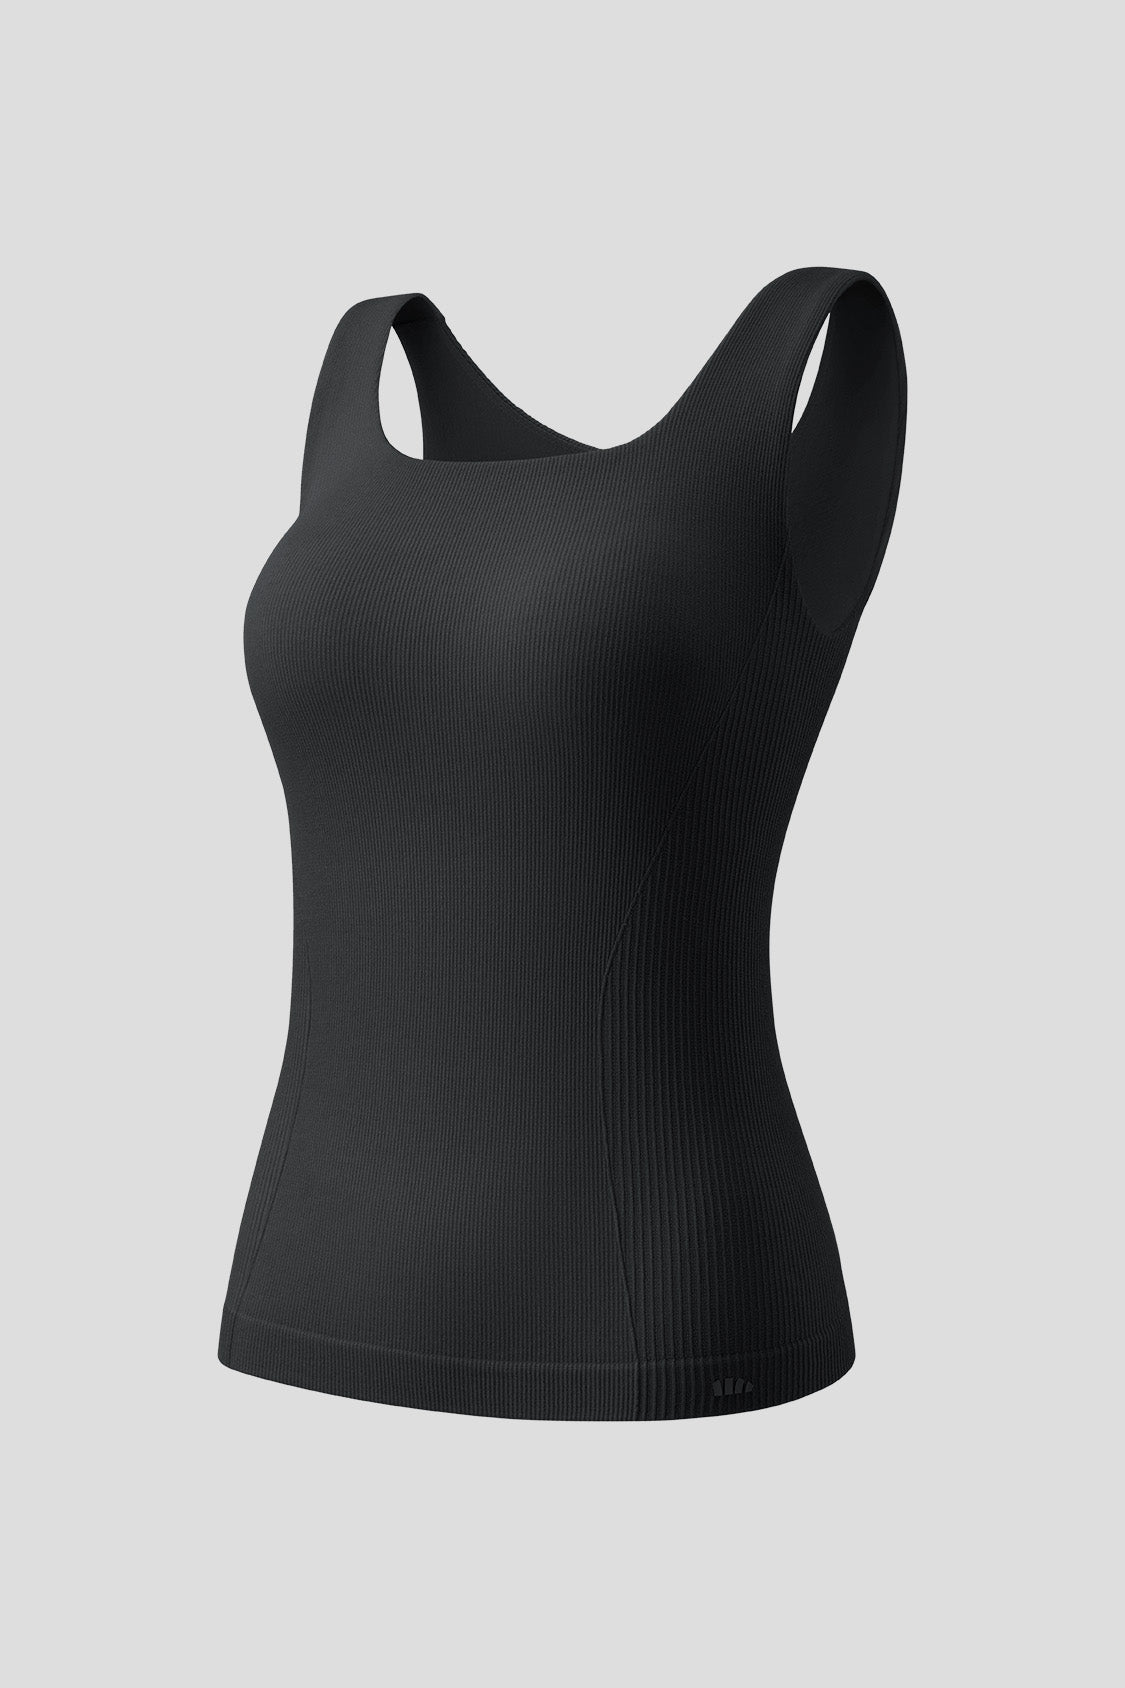 beneunder women's aw bra in thermal vest #color_ink gray